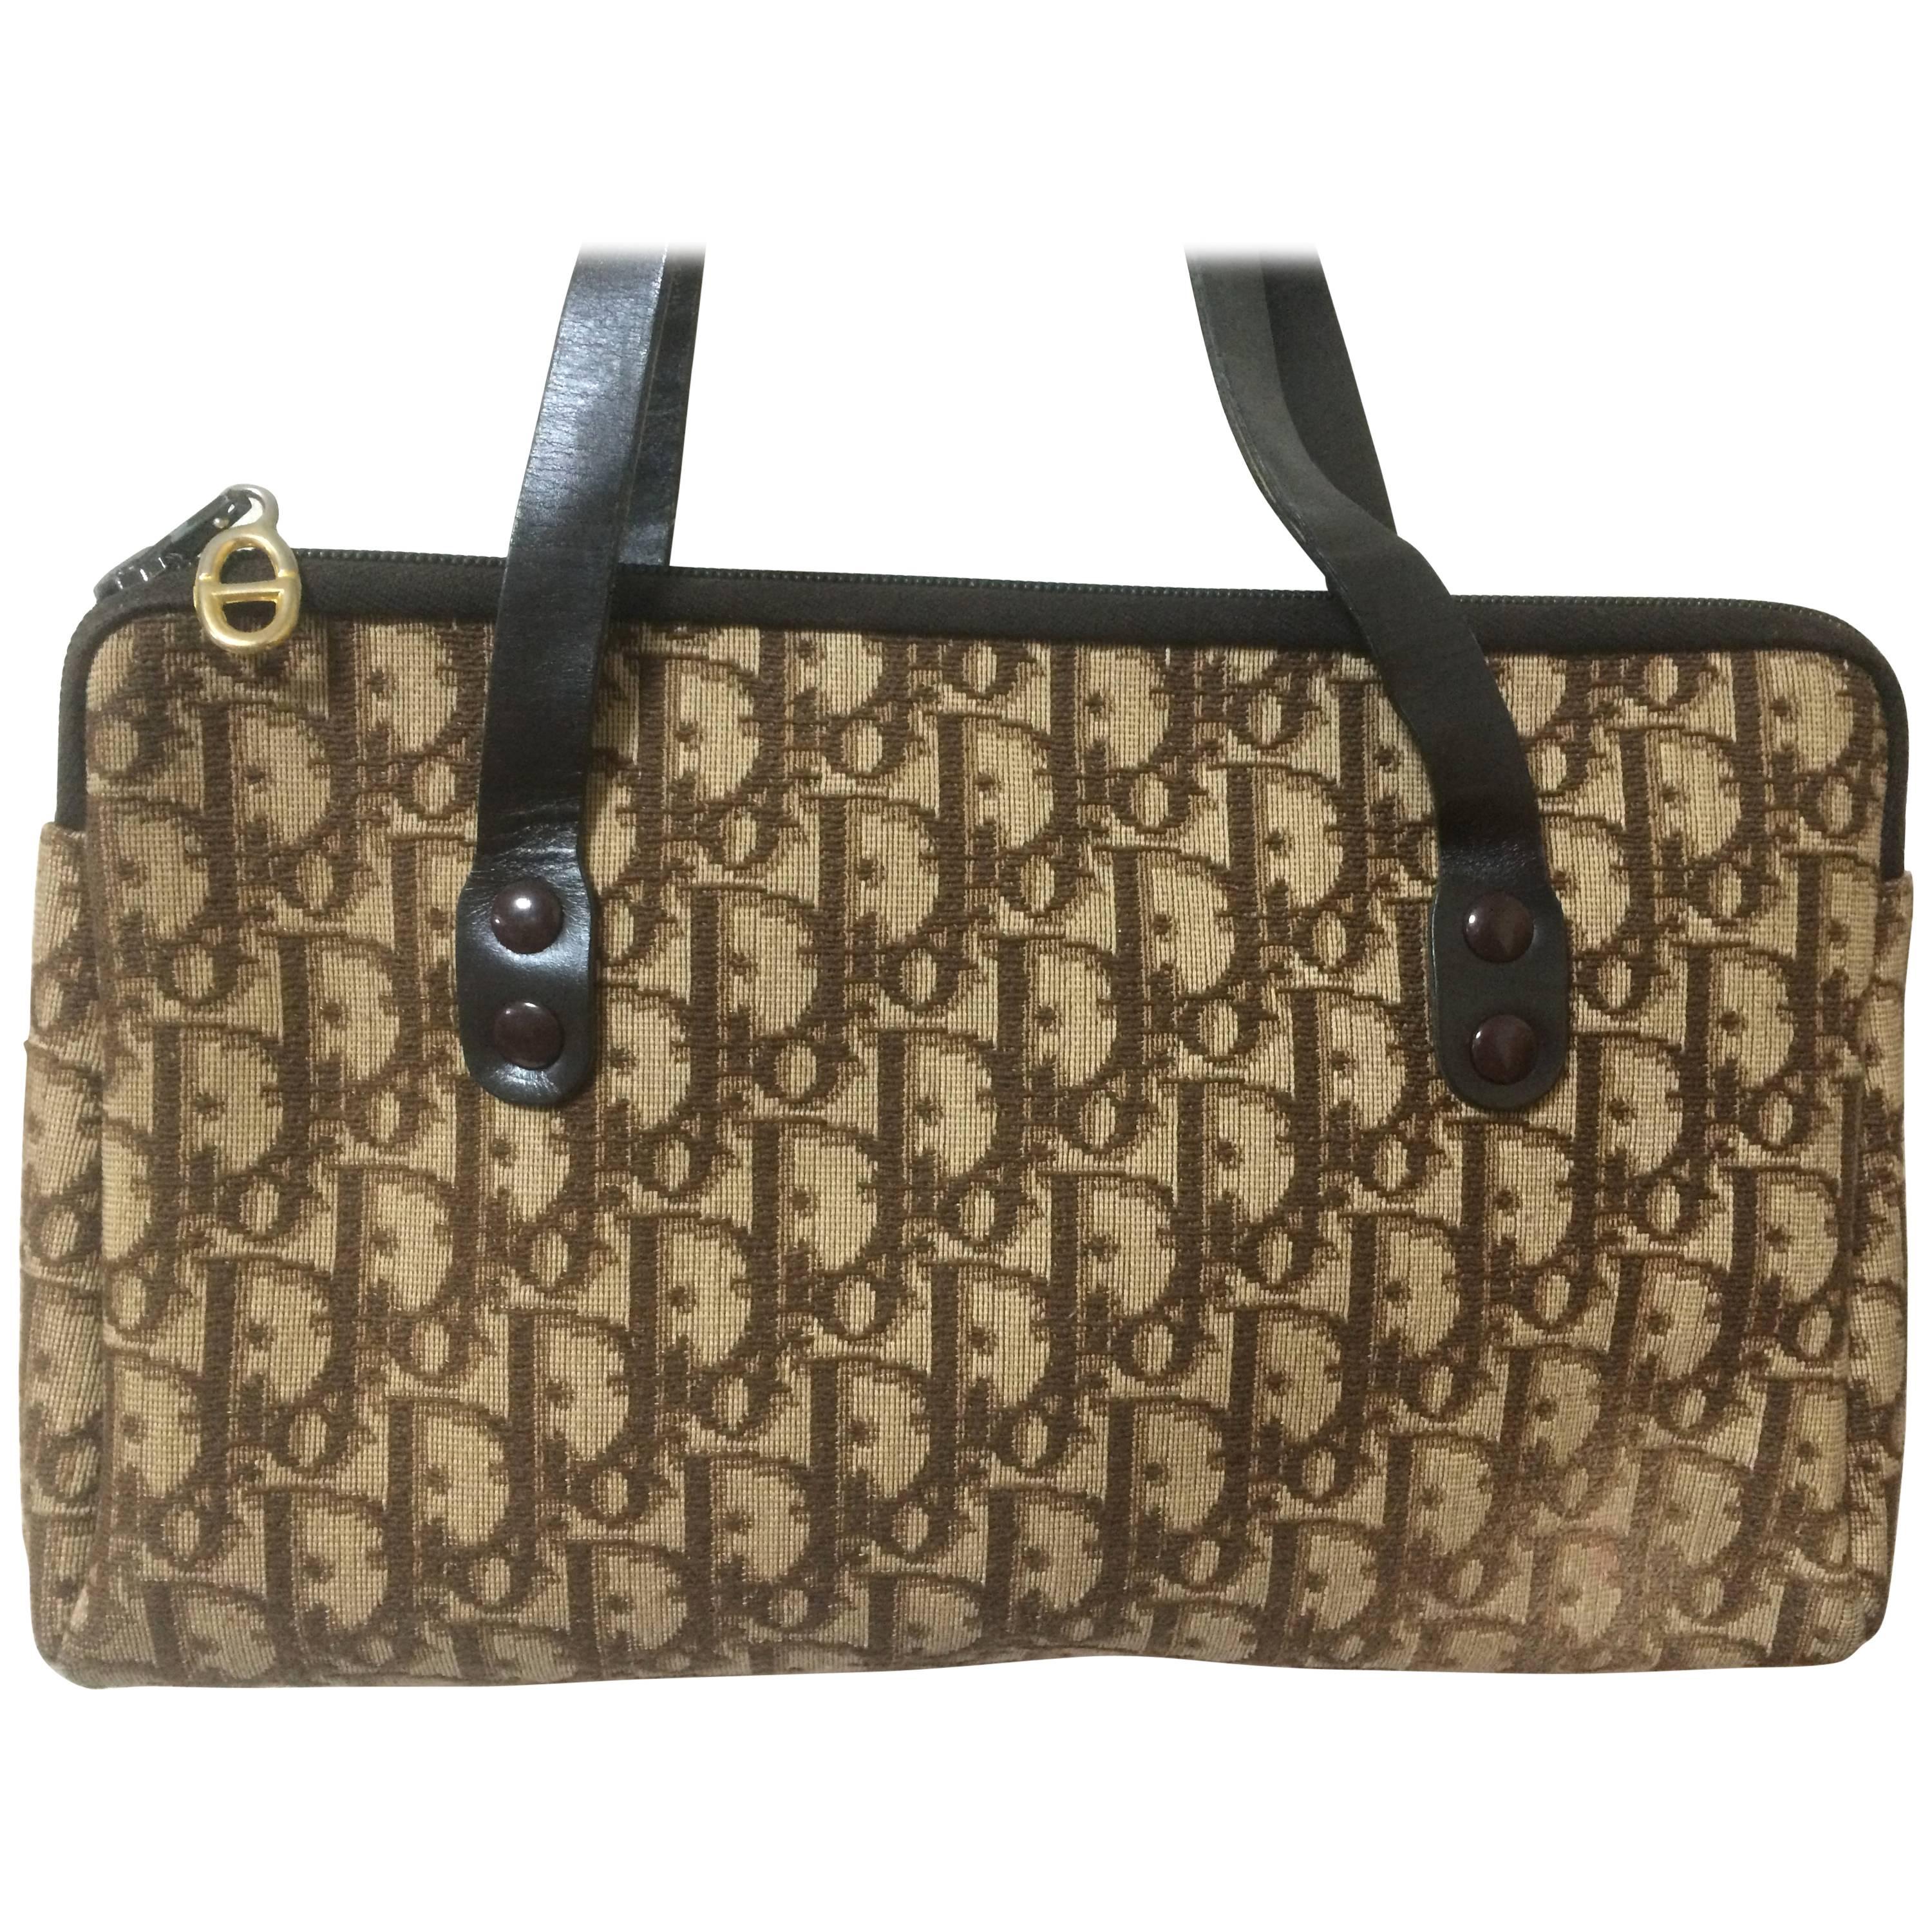 Vintage Christian Dior brown trotter jacquard mini handbag with leather handles.